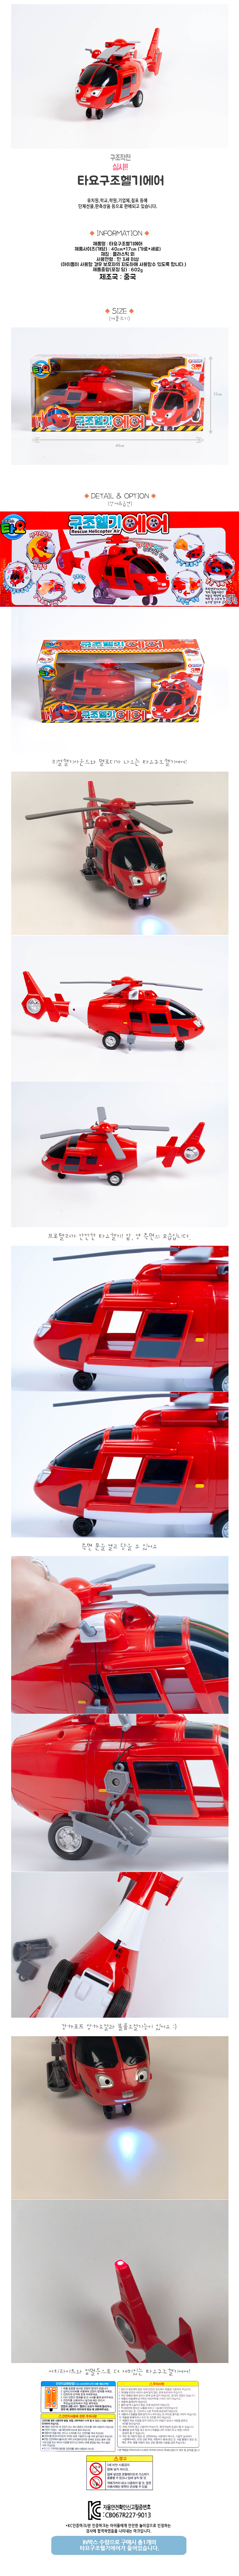 35000tayo_rescue_helicopterair_174855.jpg